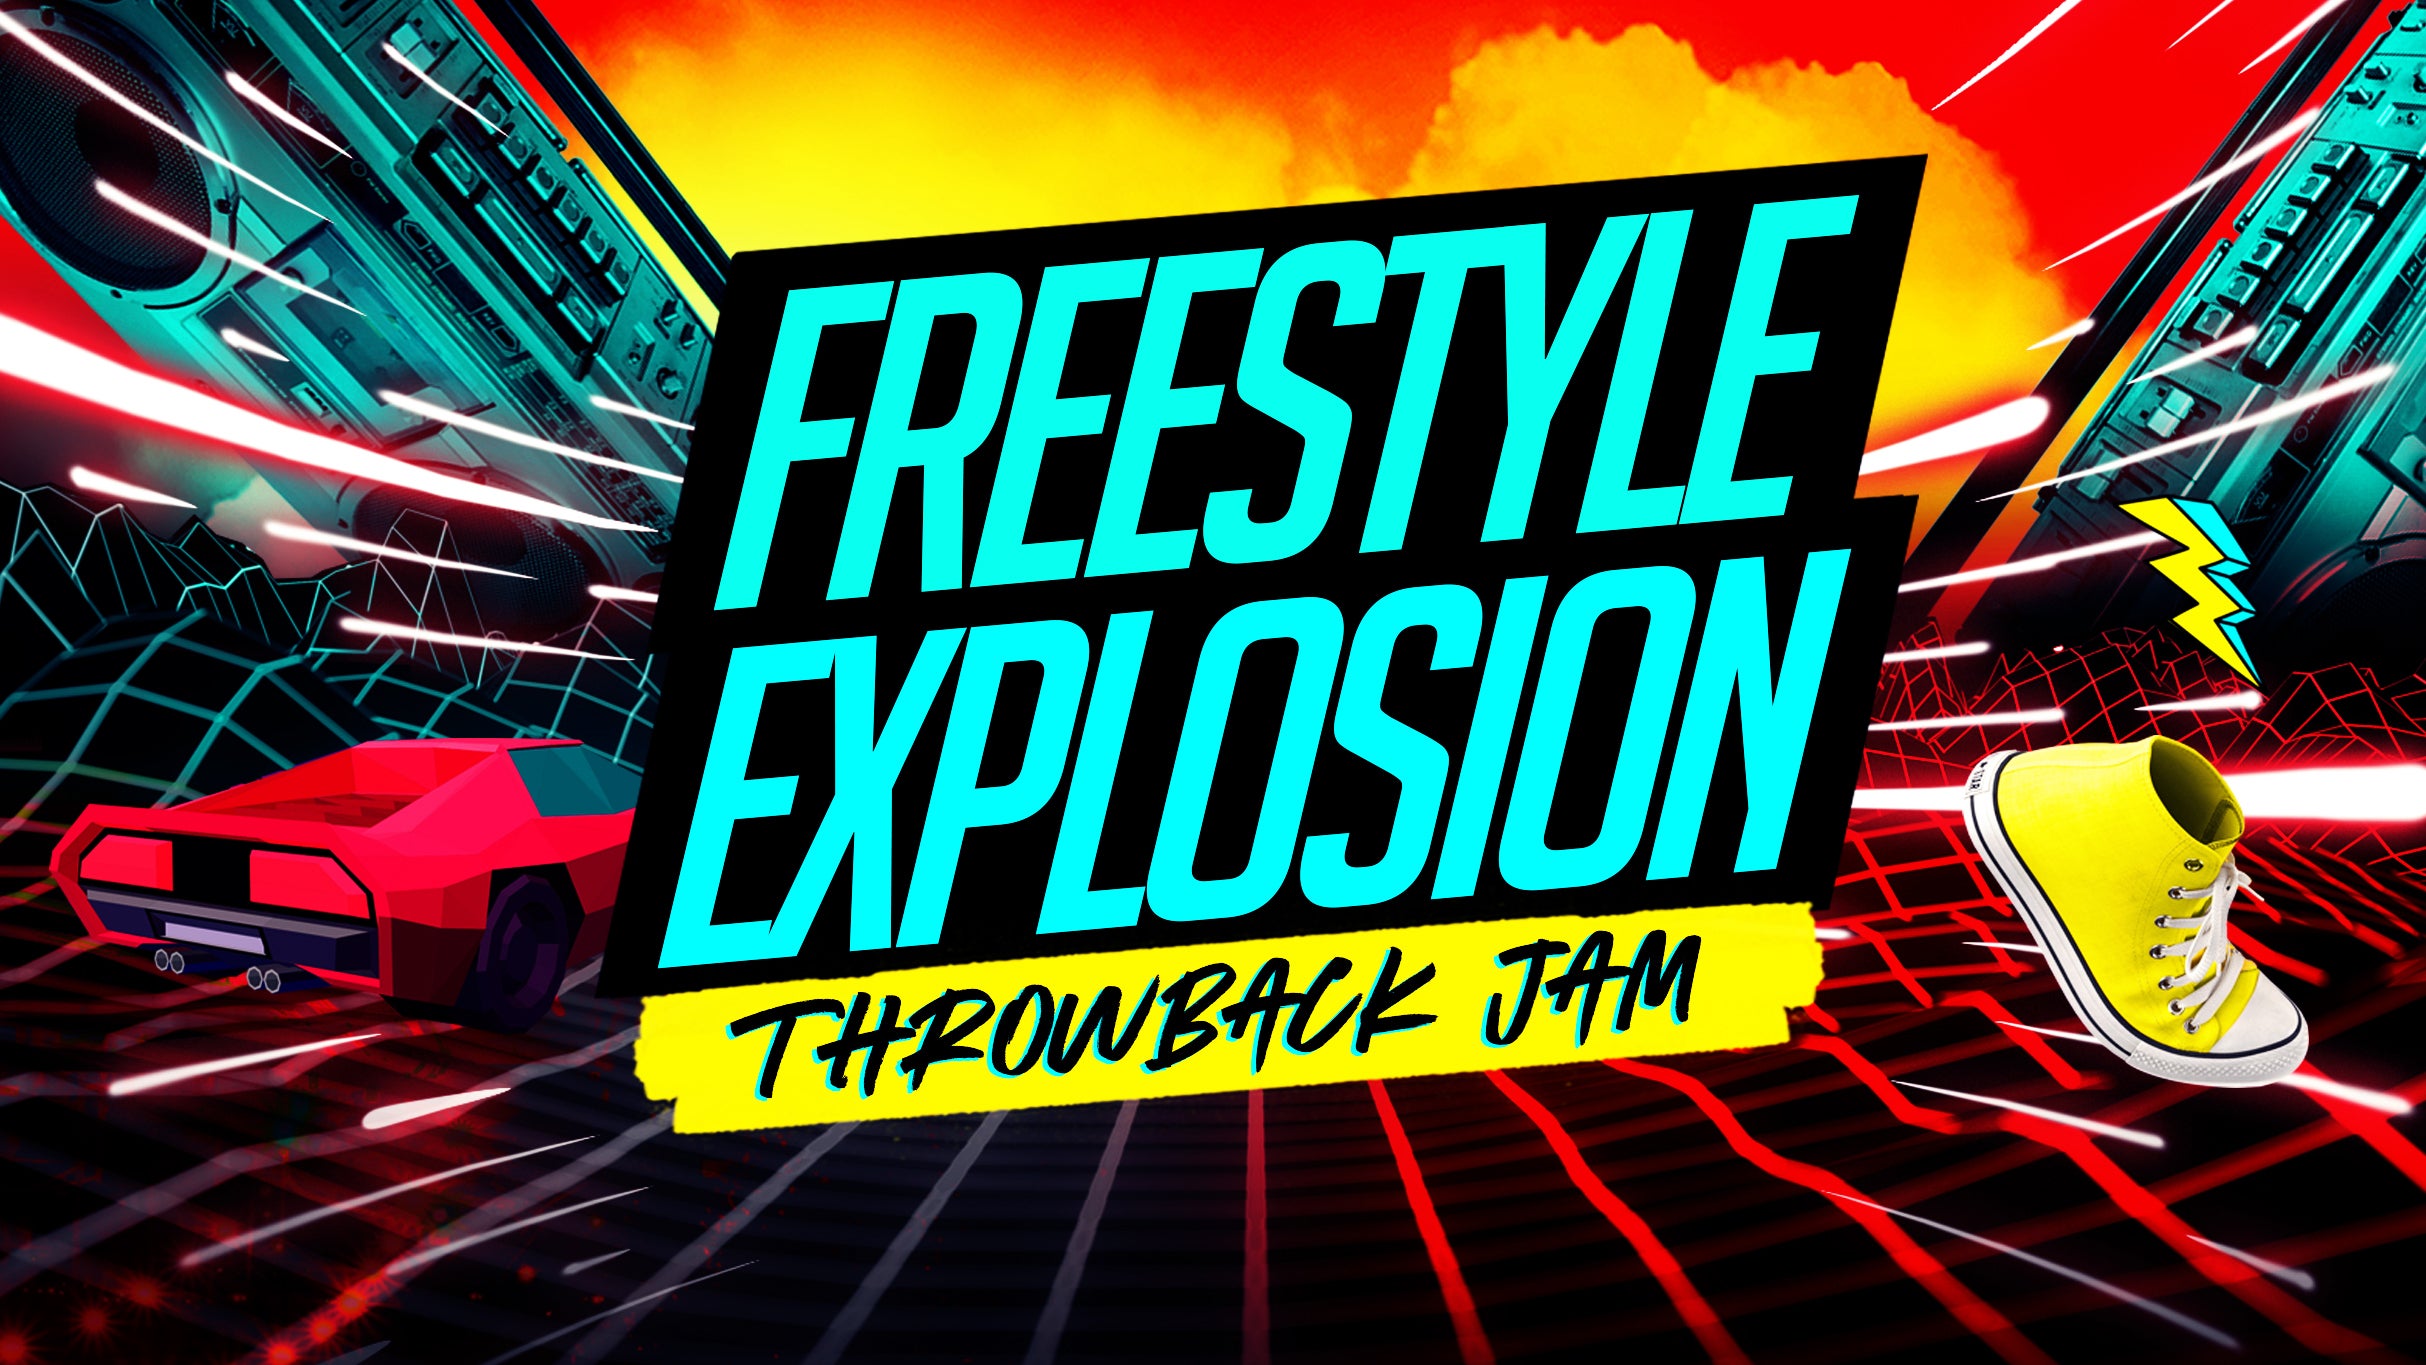 Freestyle Explosion Throwback Jam hero